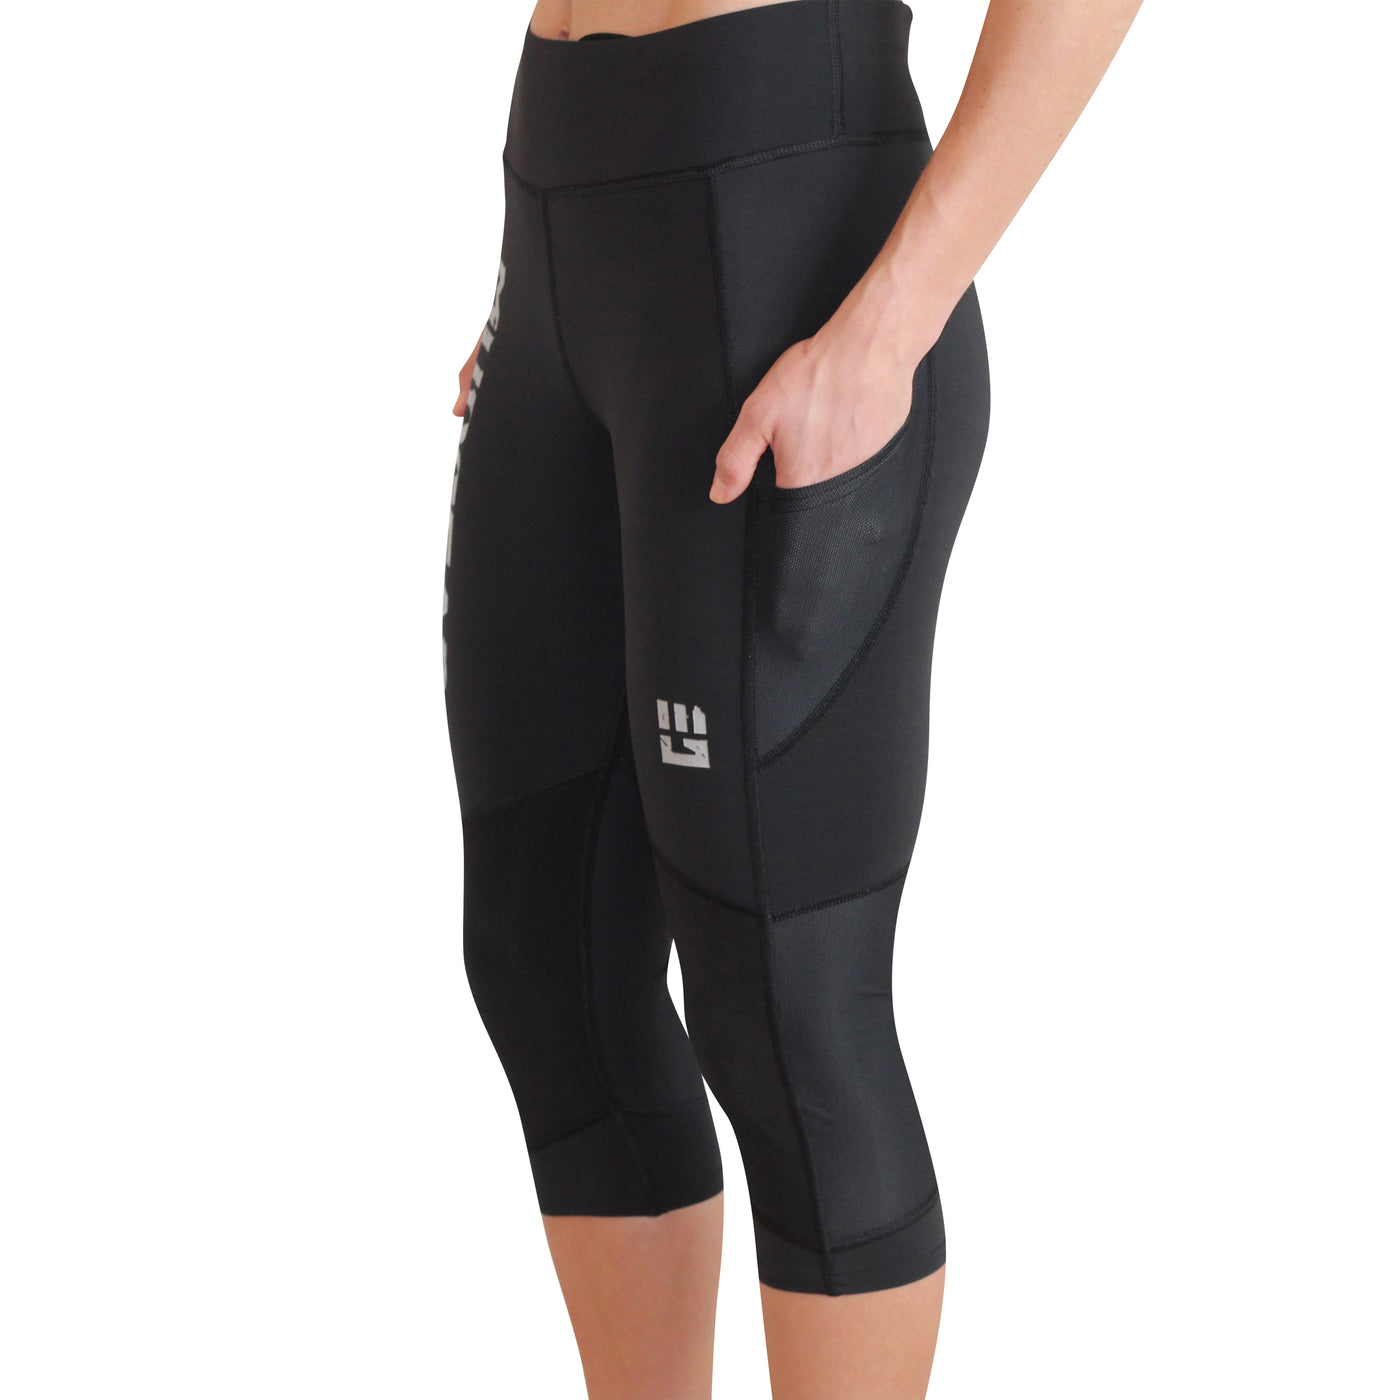 Womens medium Under Armour 3/4 length compression capri leggings